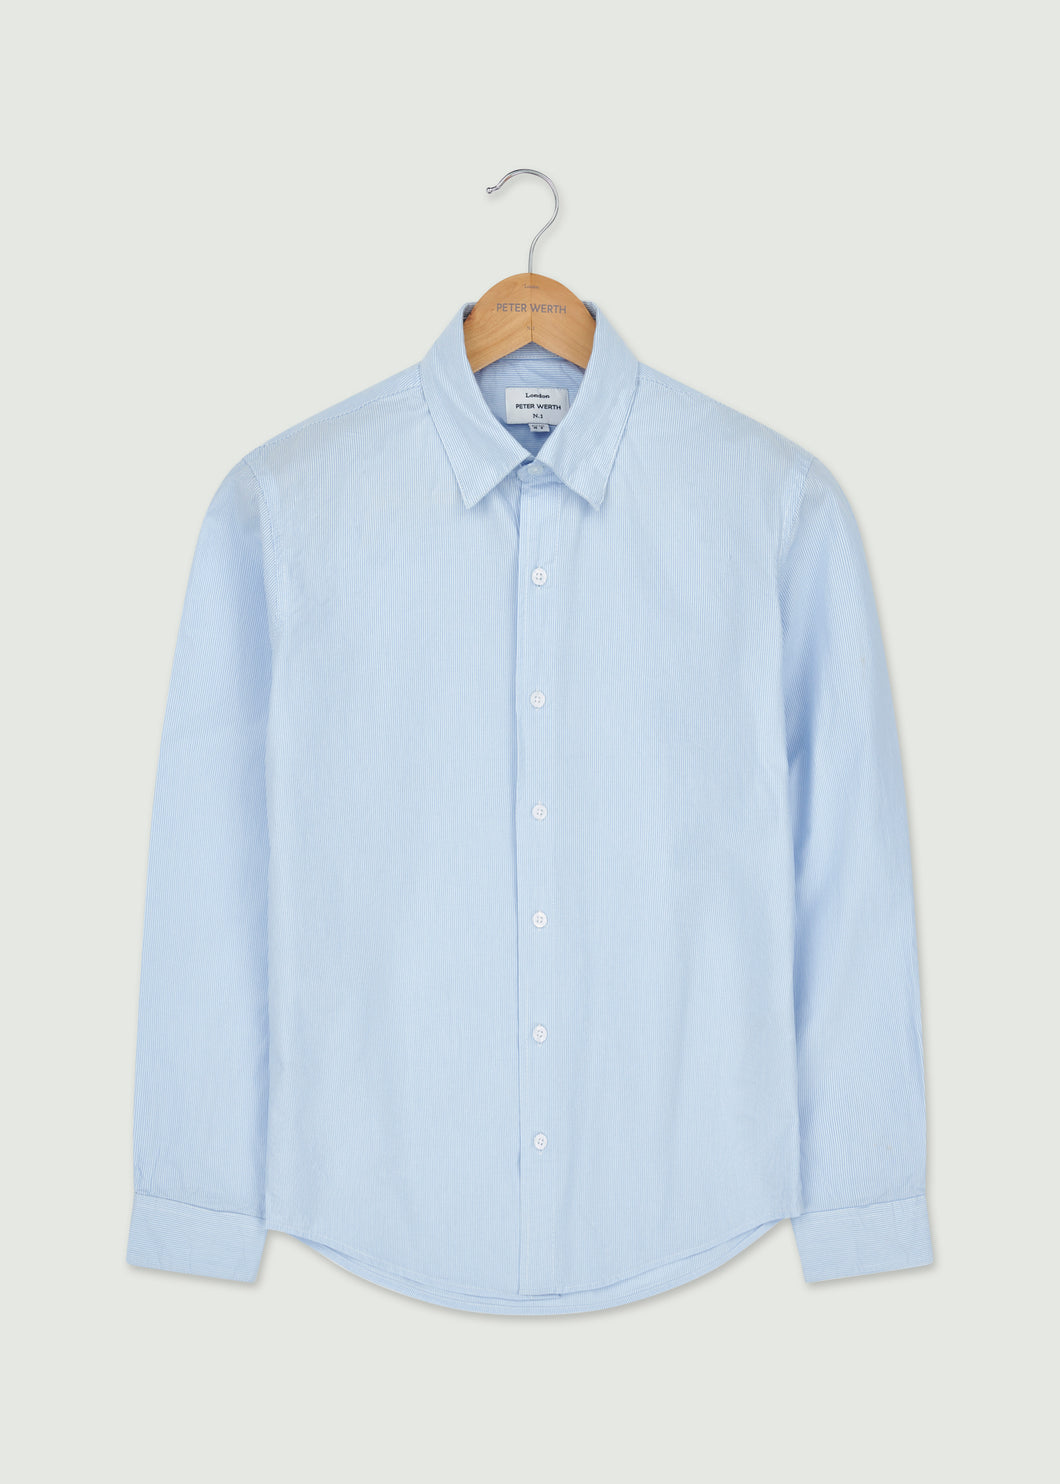 Dupont Long Sleeved Shirt - Light Blue